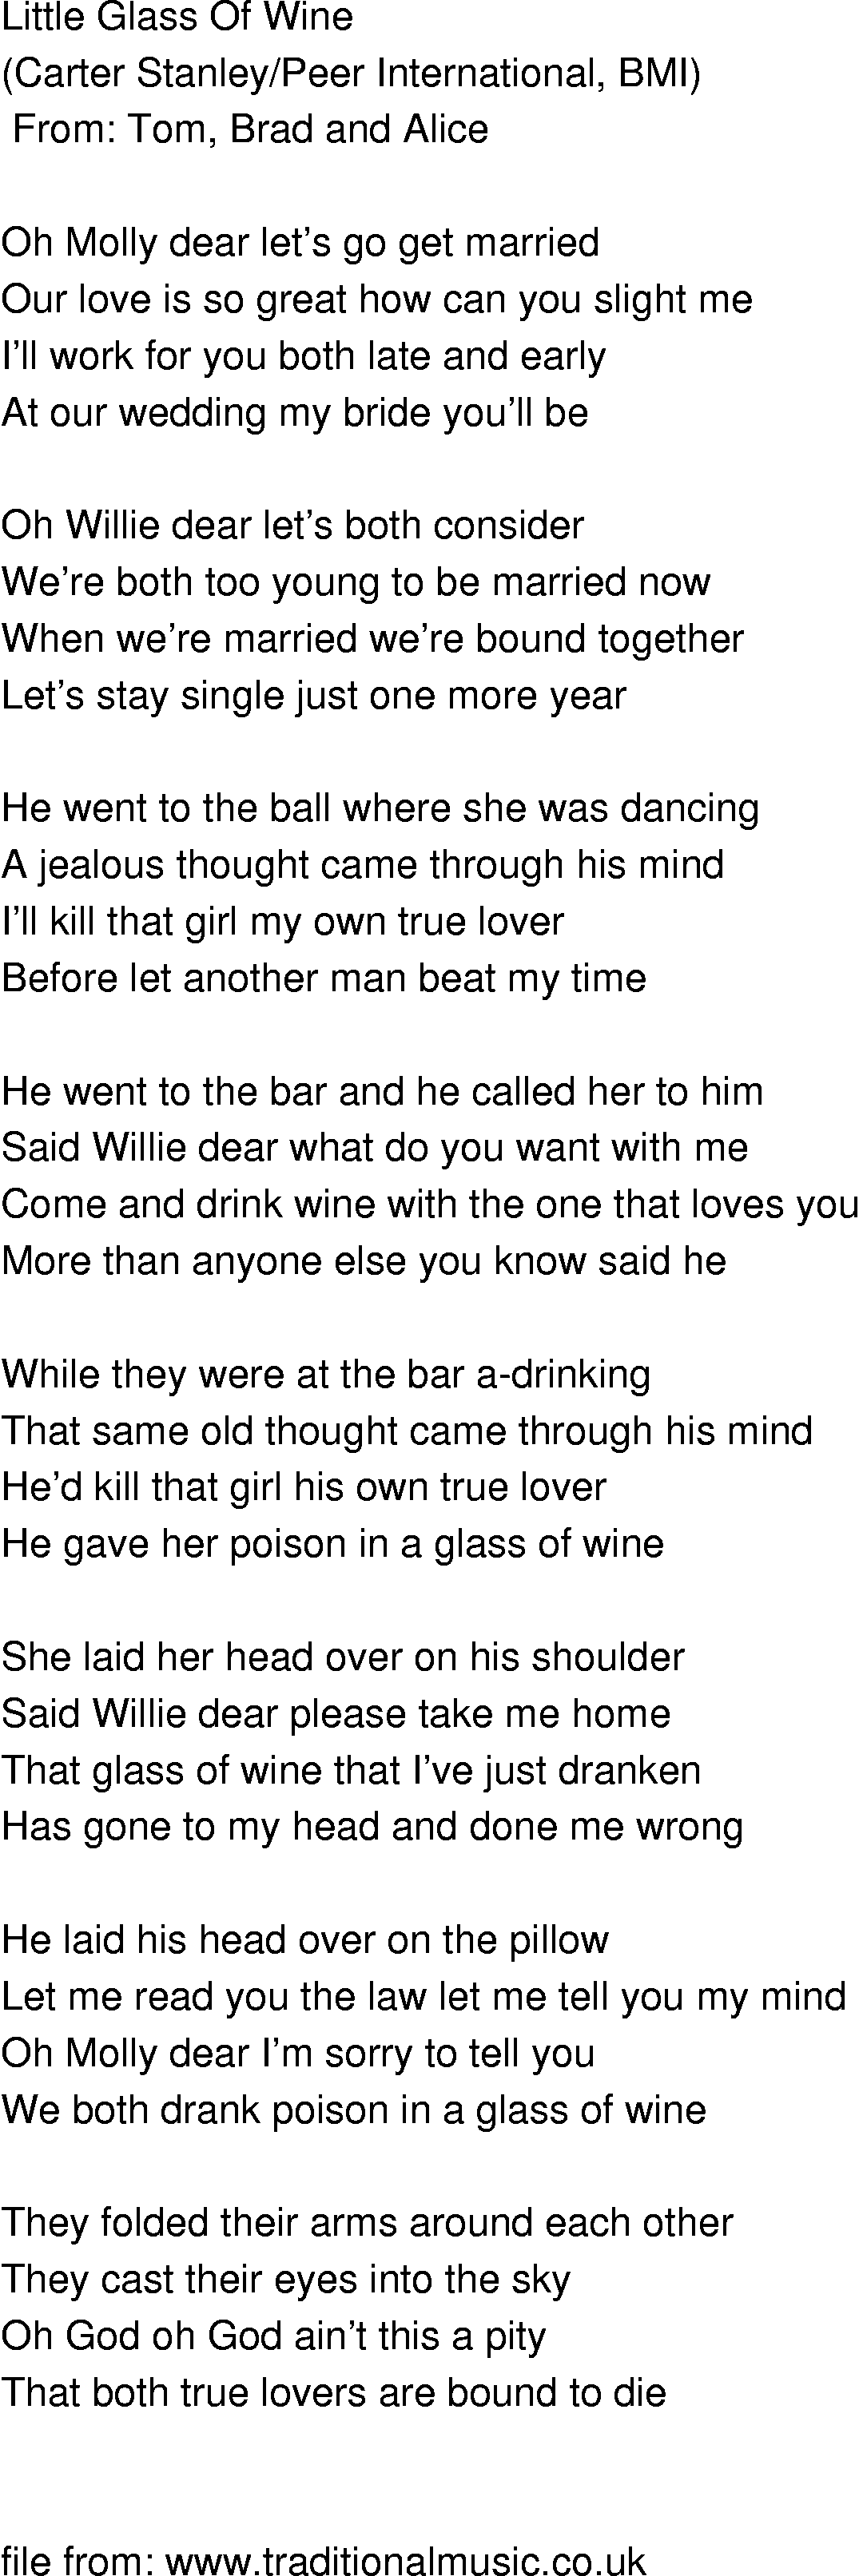 Old-Time (oldtimey) Song Lyrics - little glass of wine